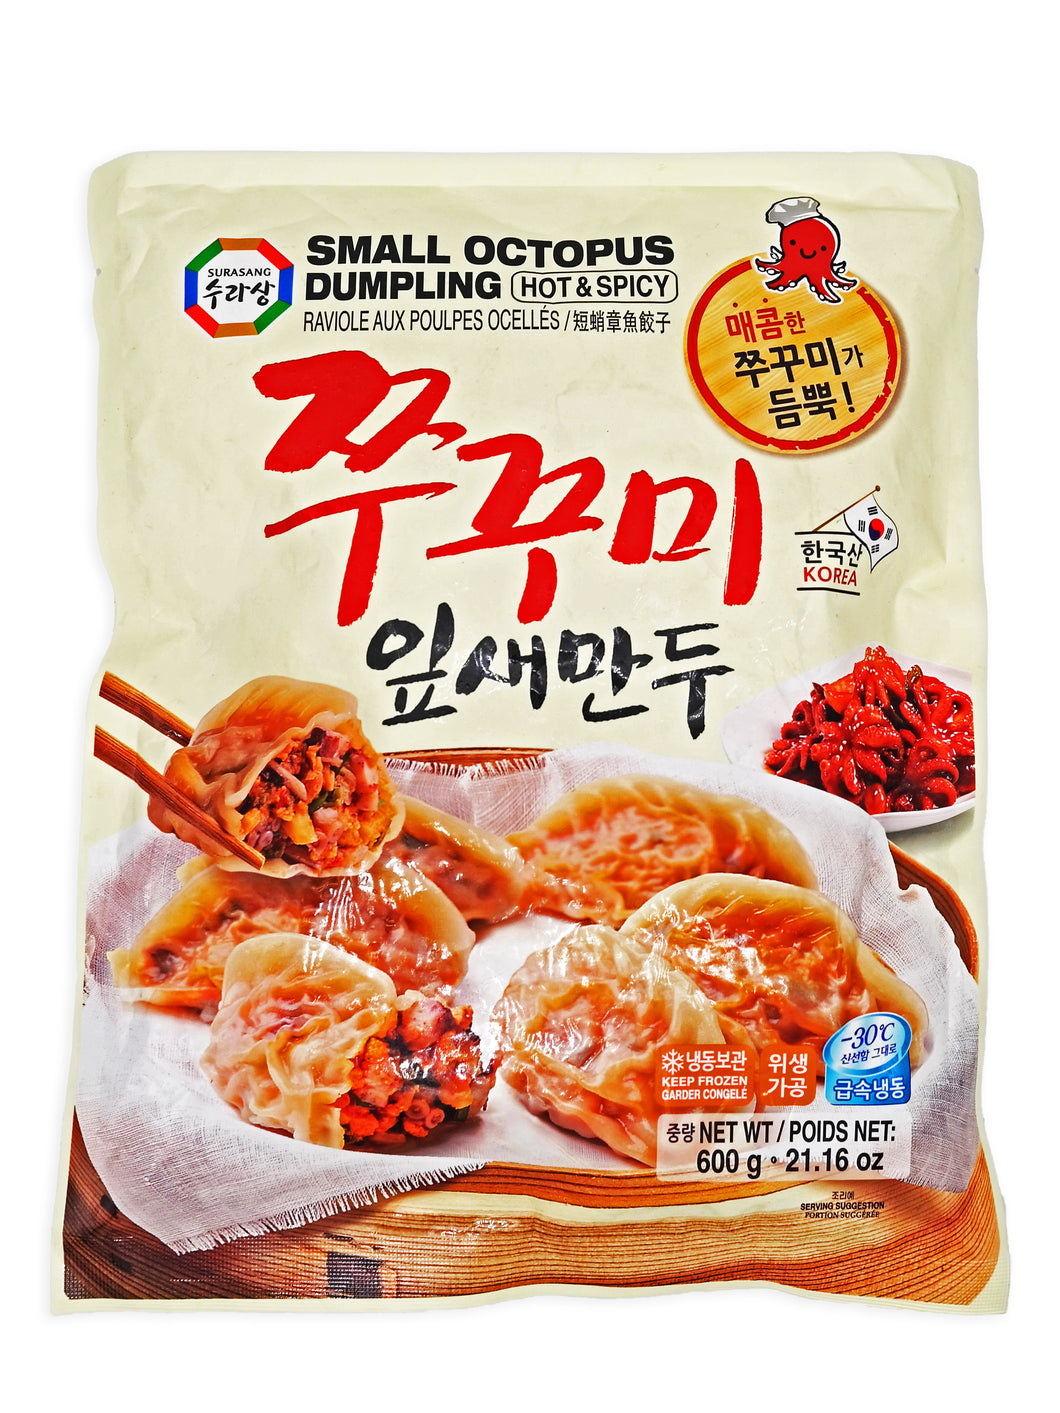 Surasang Small Octopus Dumpling Hot & Spicy